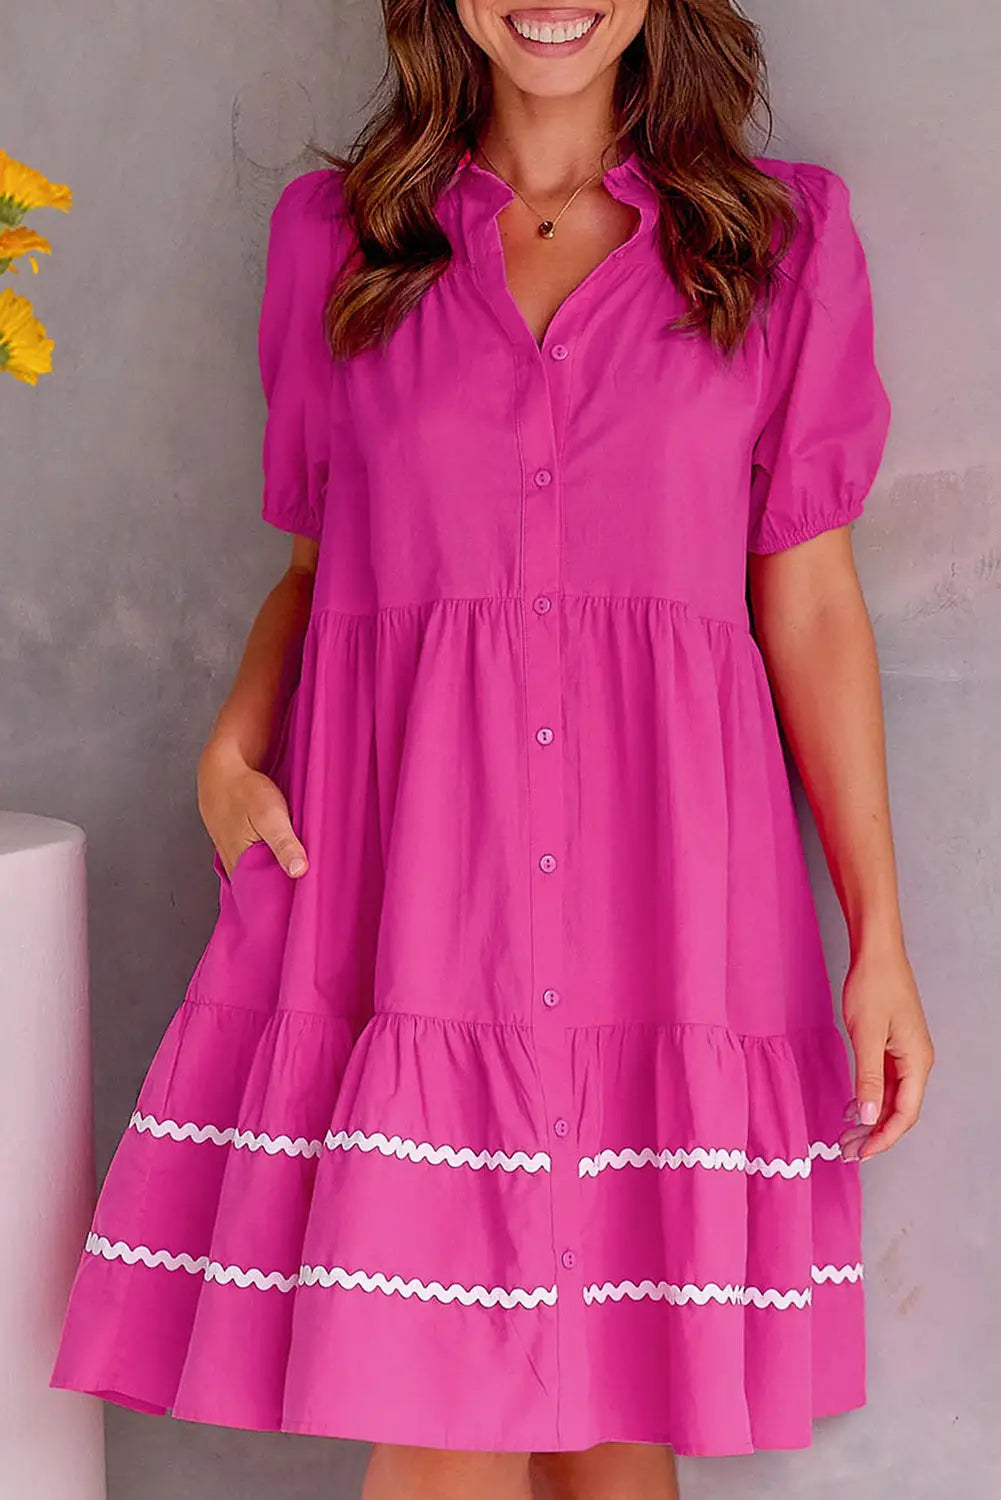 Shirt dress - rose red puff sleeve contrast ricrac - s / 100% cotton - mini dresses